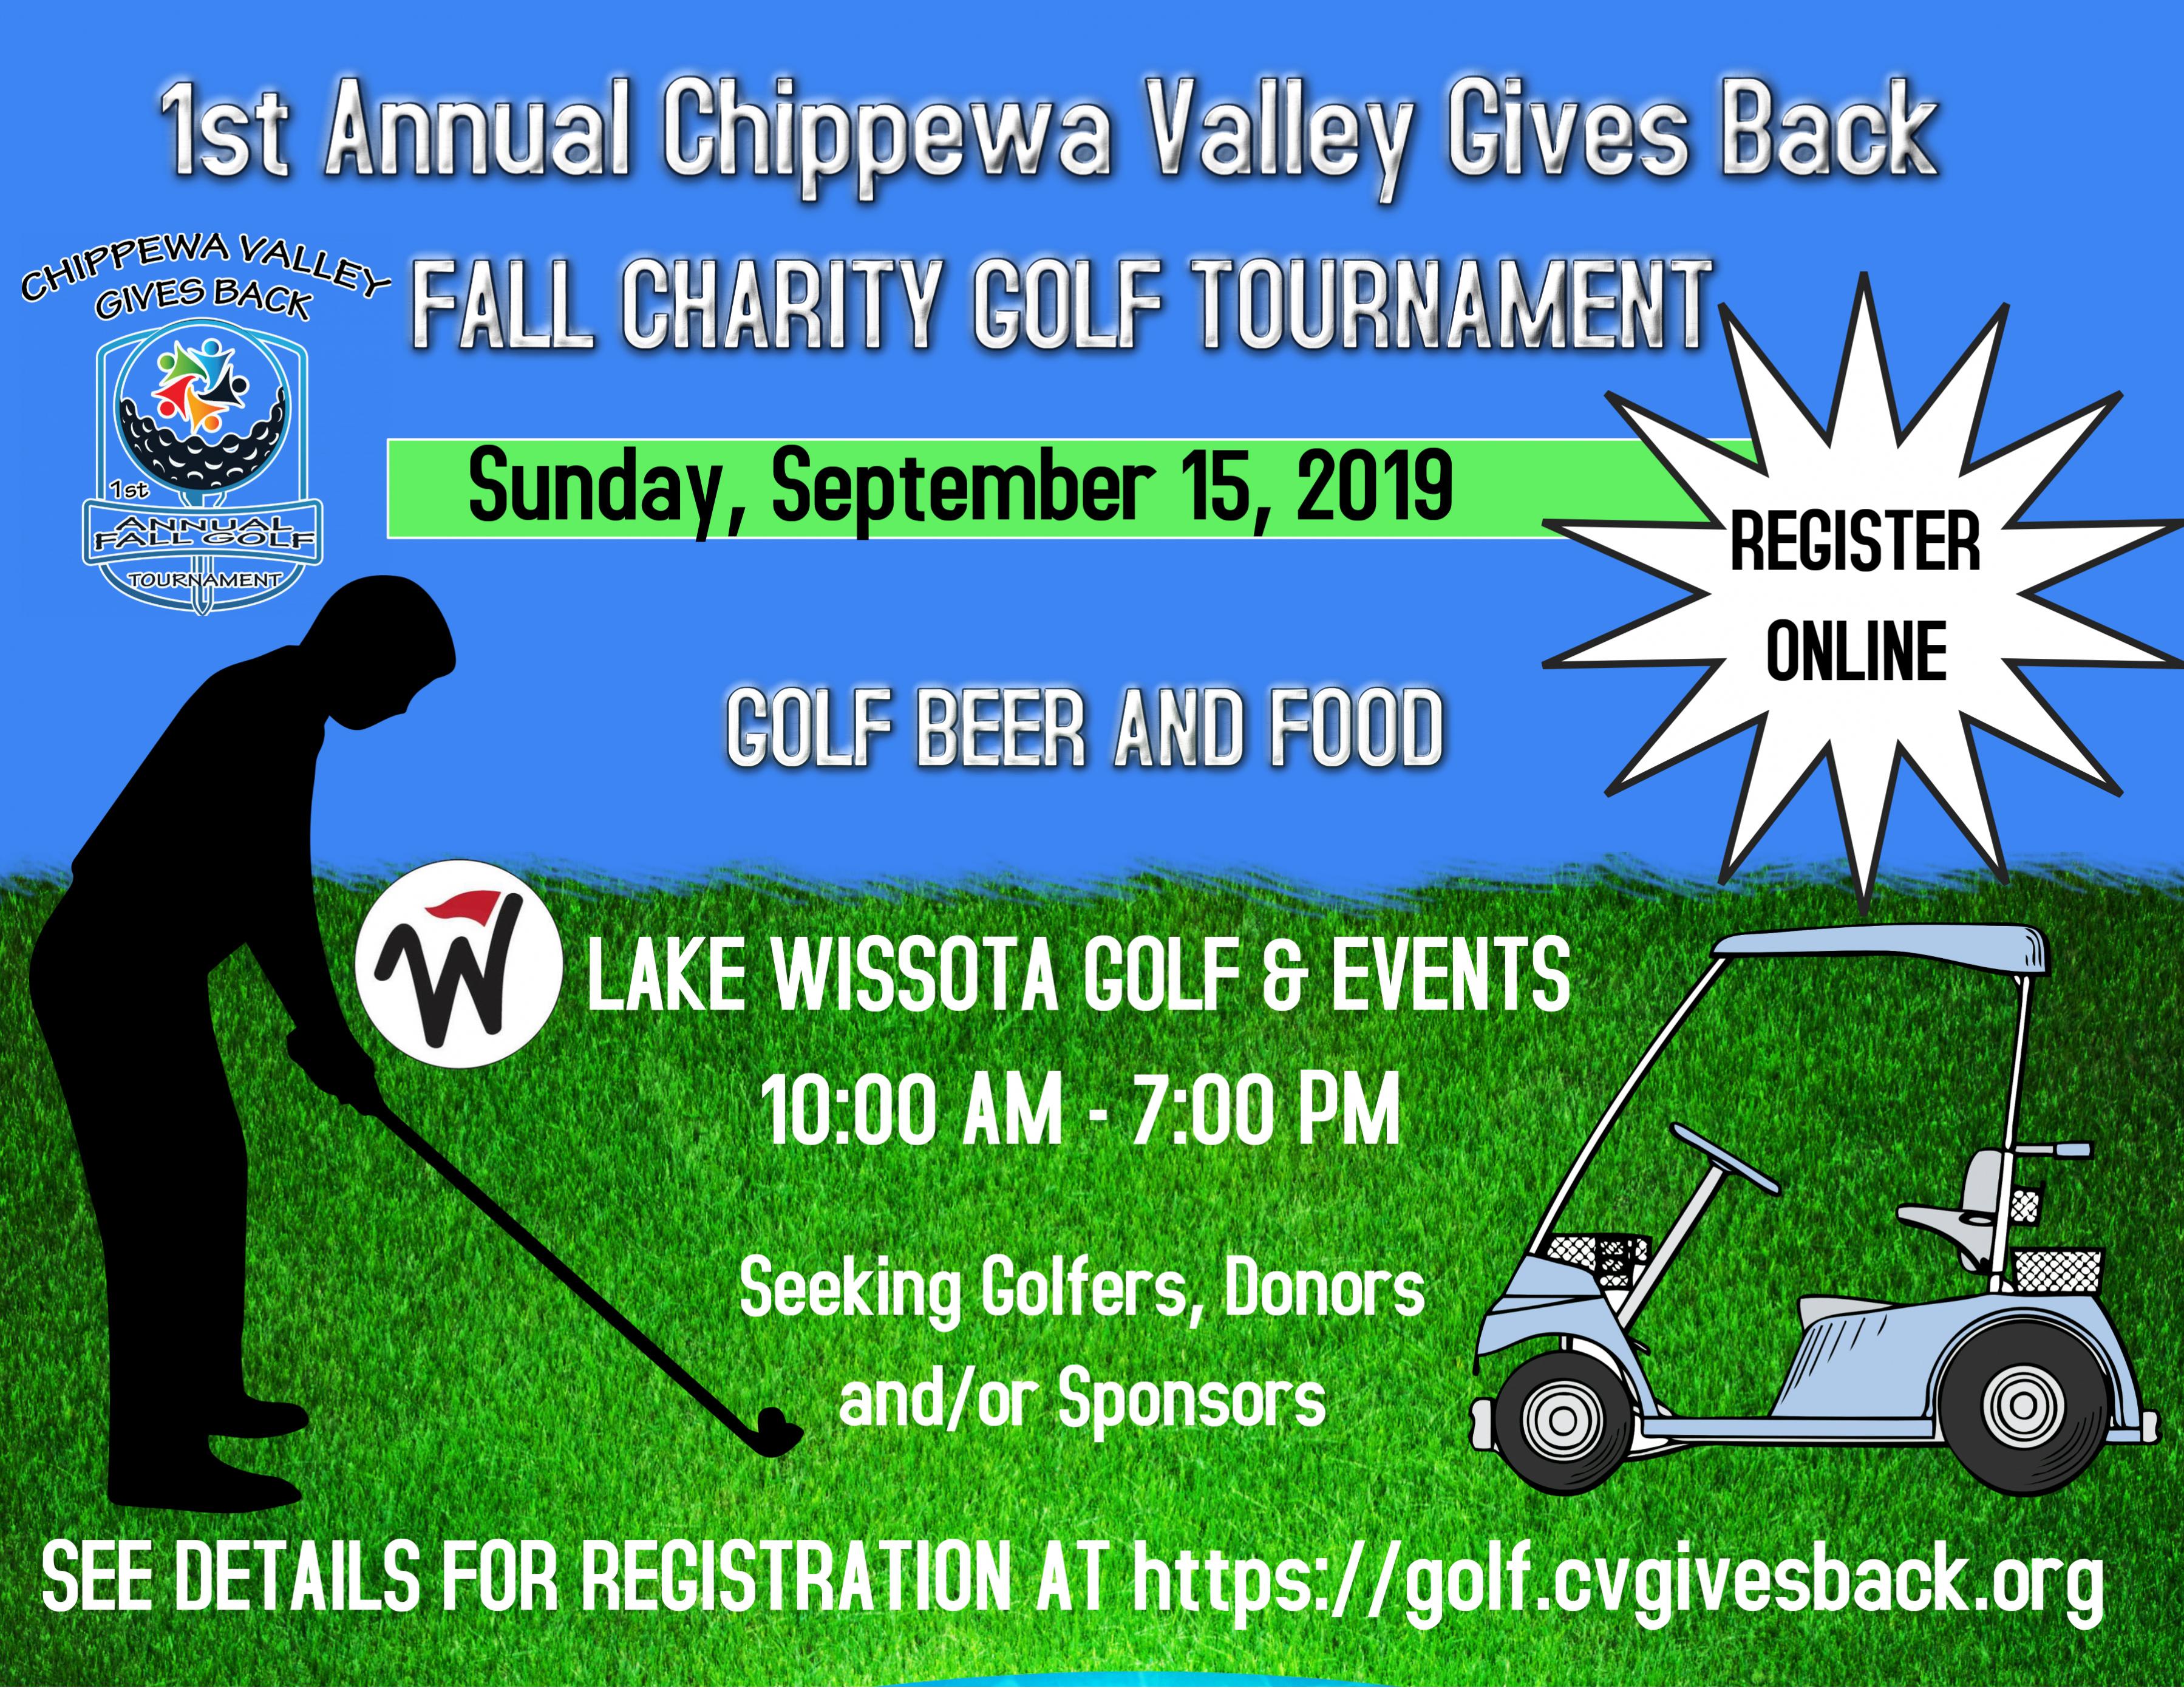 1st Annual Fall Charity Golf Tournament